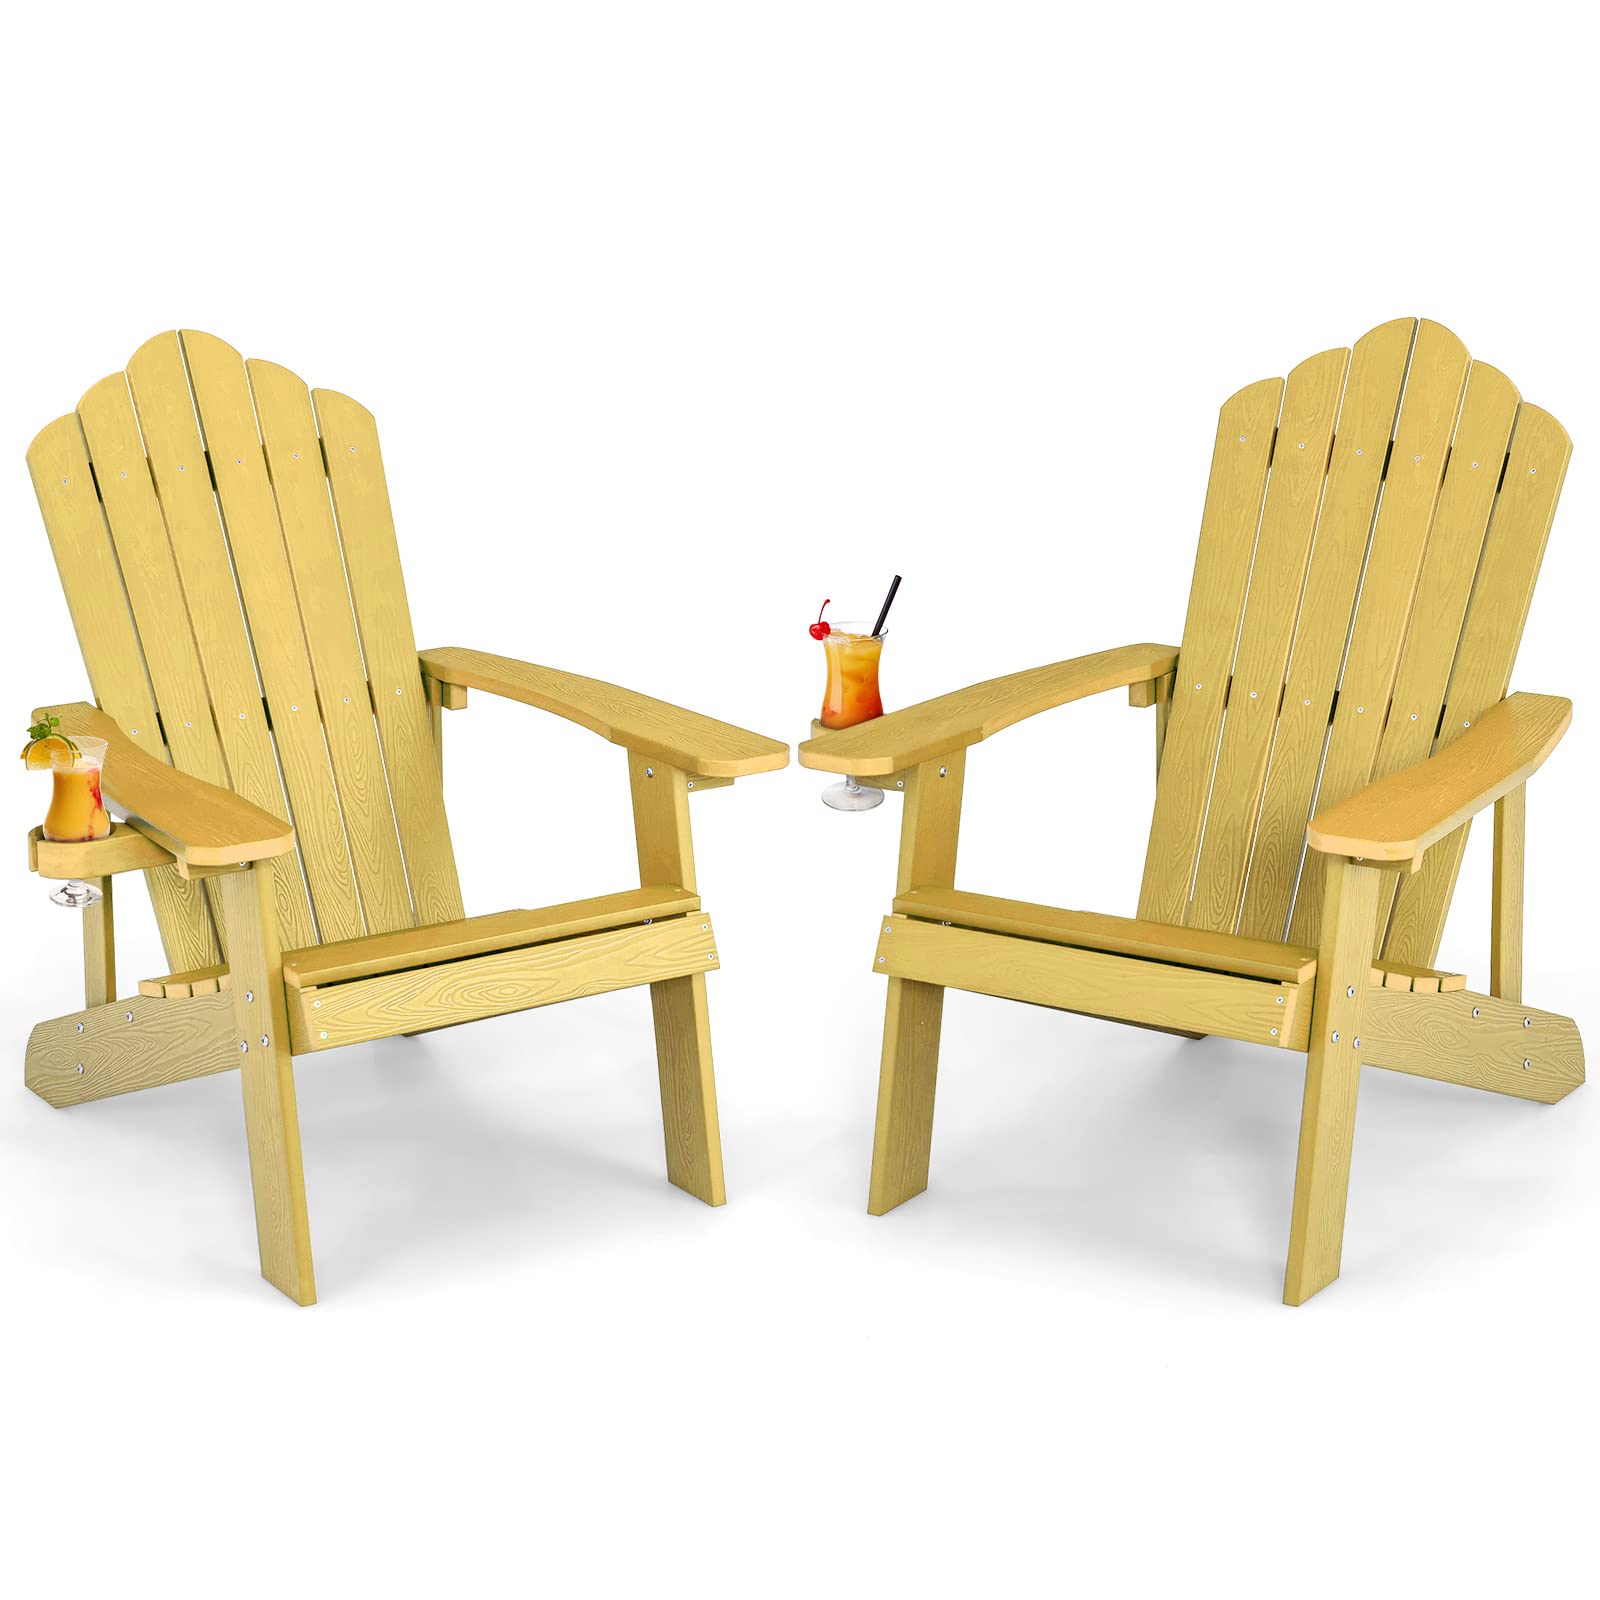 Giantex Outdoor Adirondack Chair, Yellow